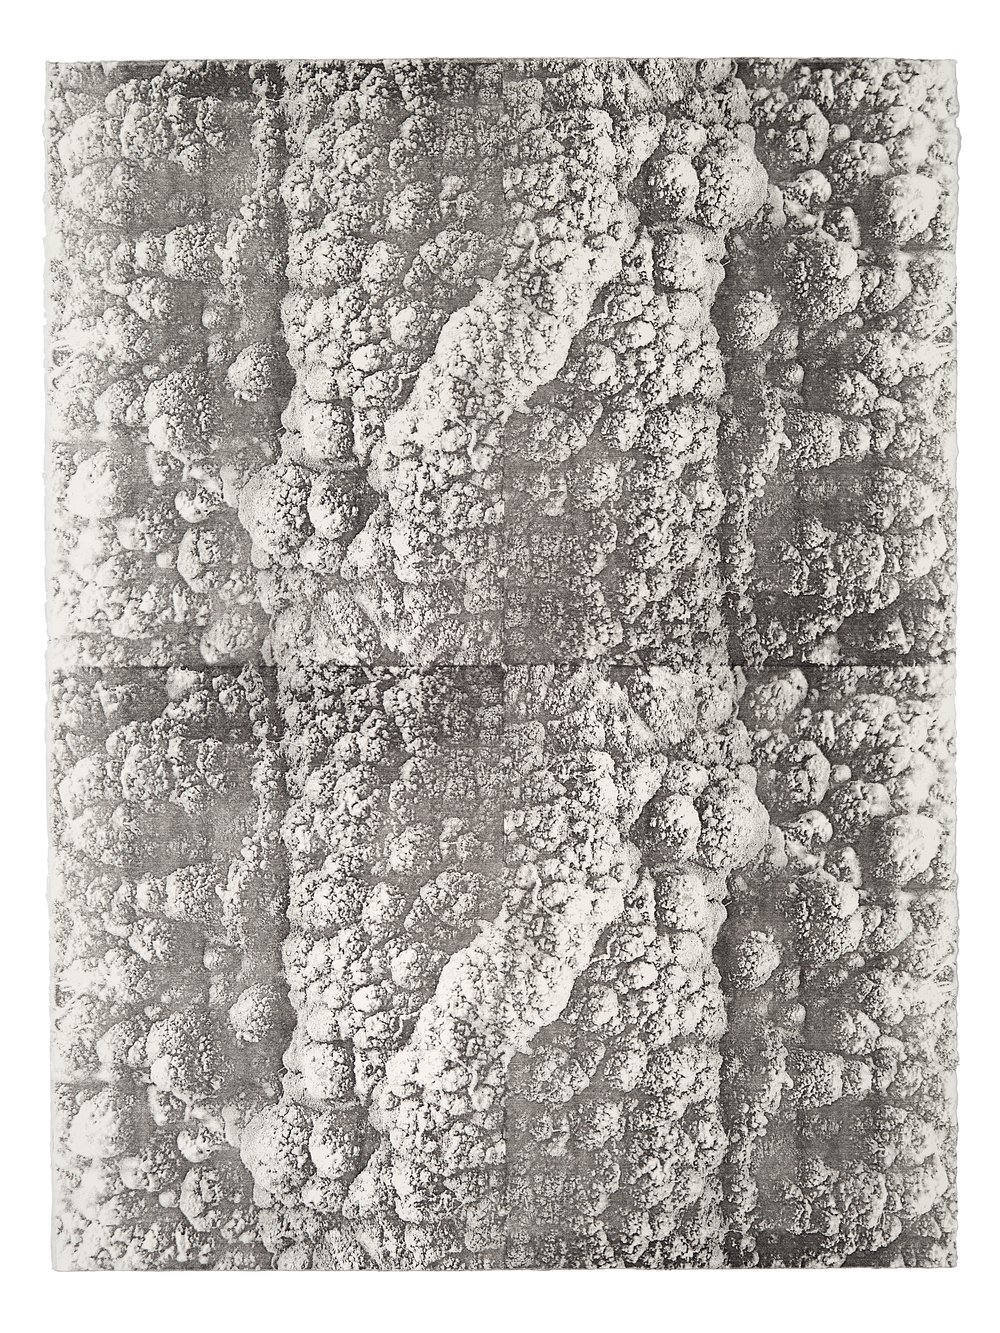 Svätopluk Mikyta: Antiorganic surface II., 2017, aceton print, size: 76,5 x 57,5